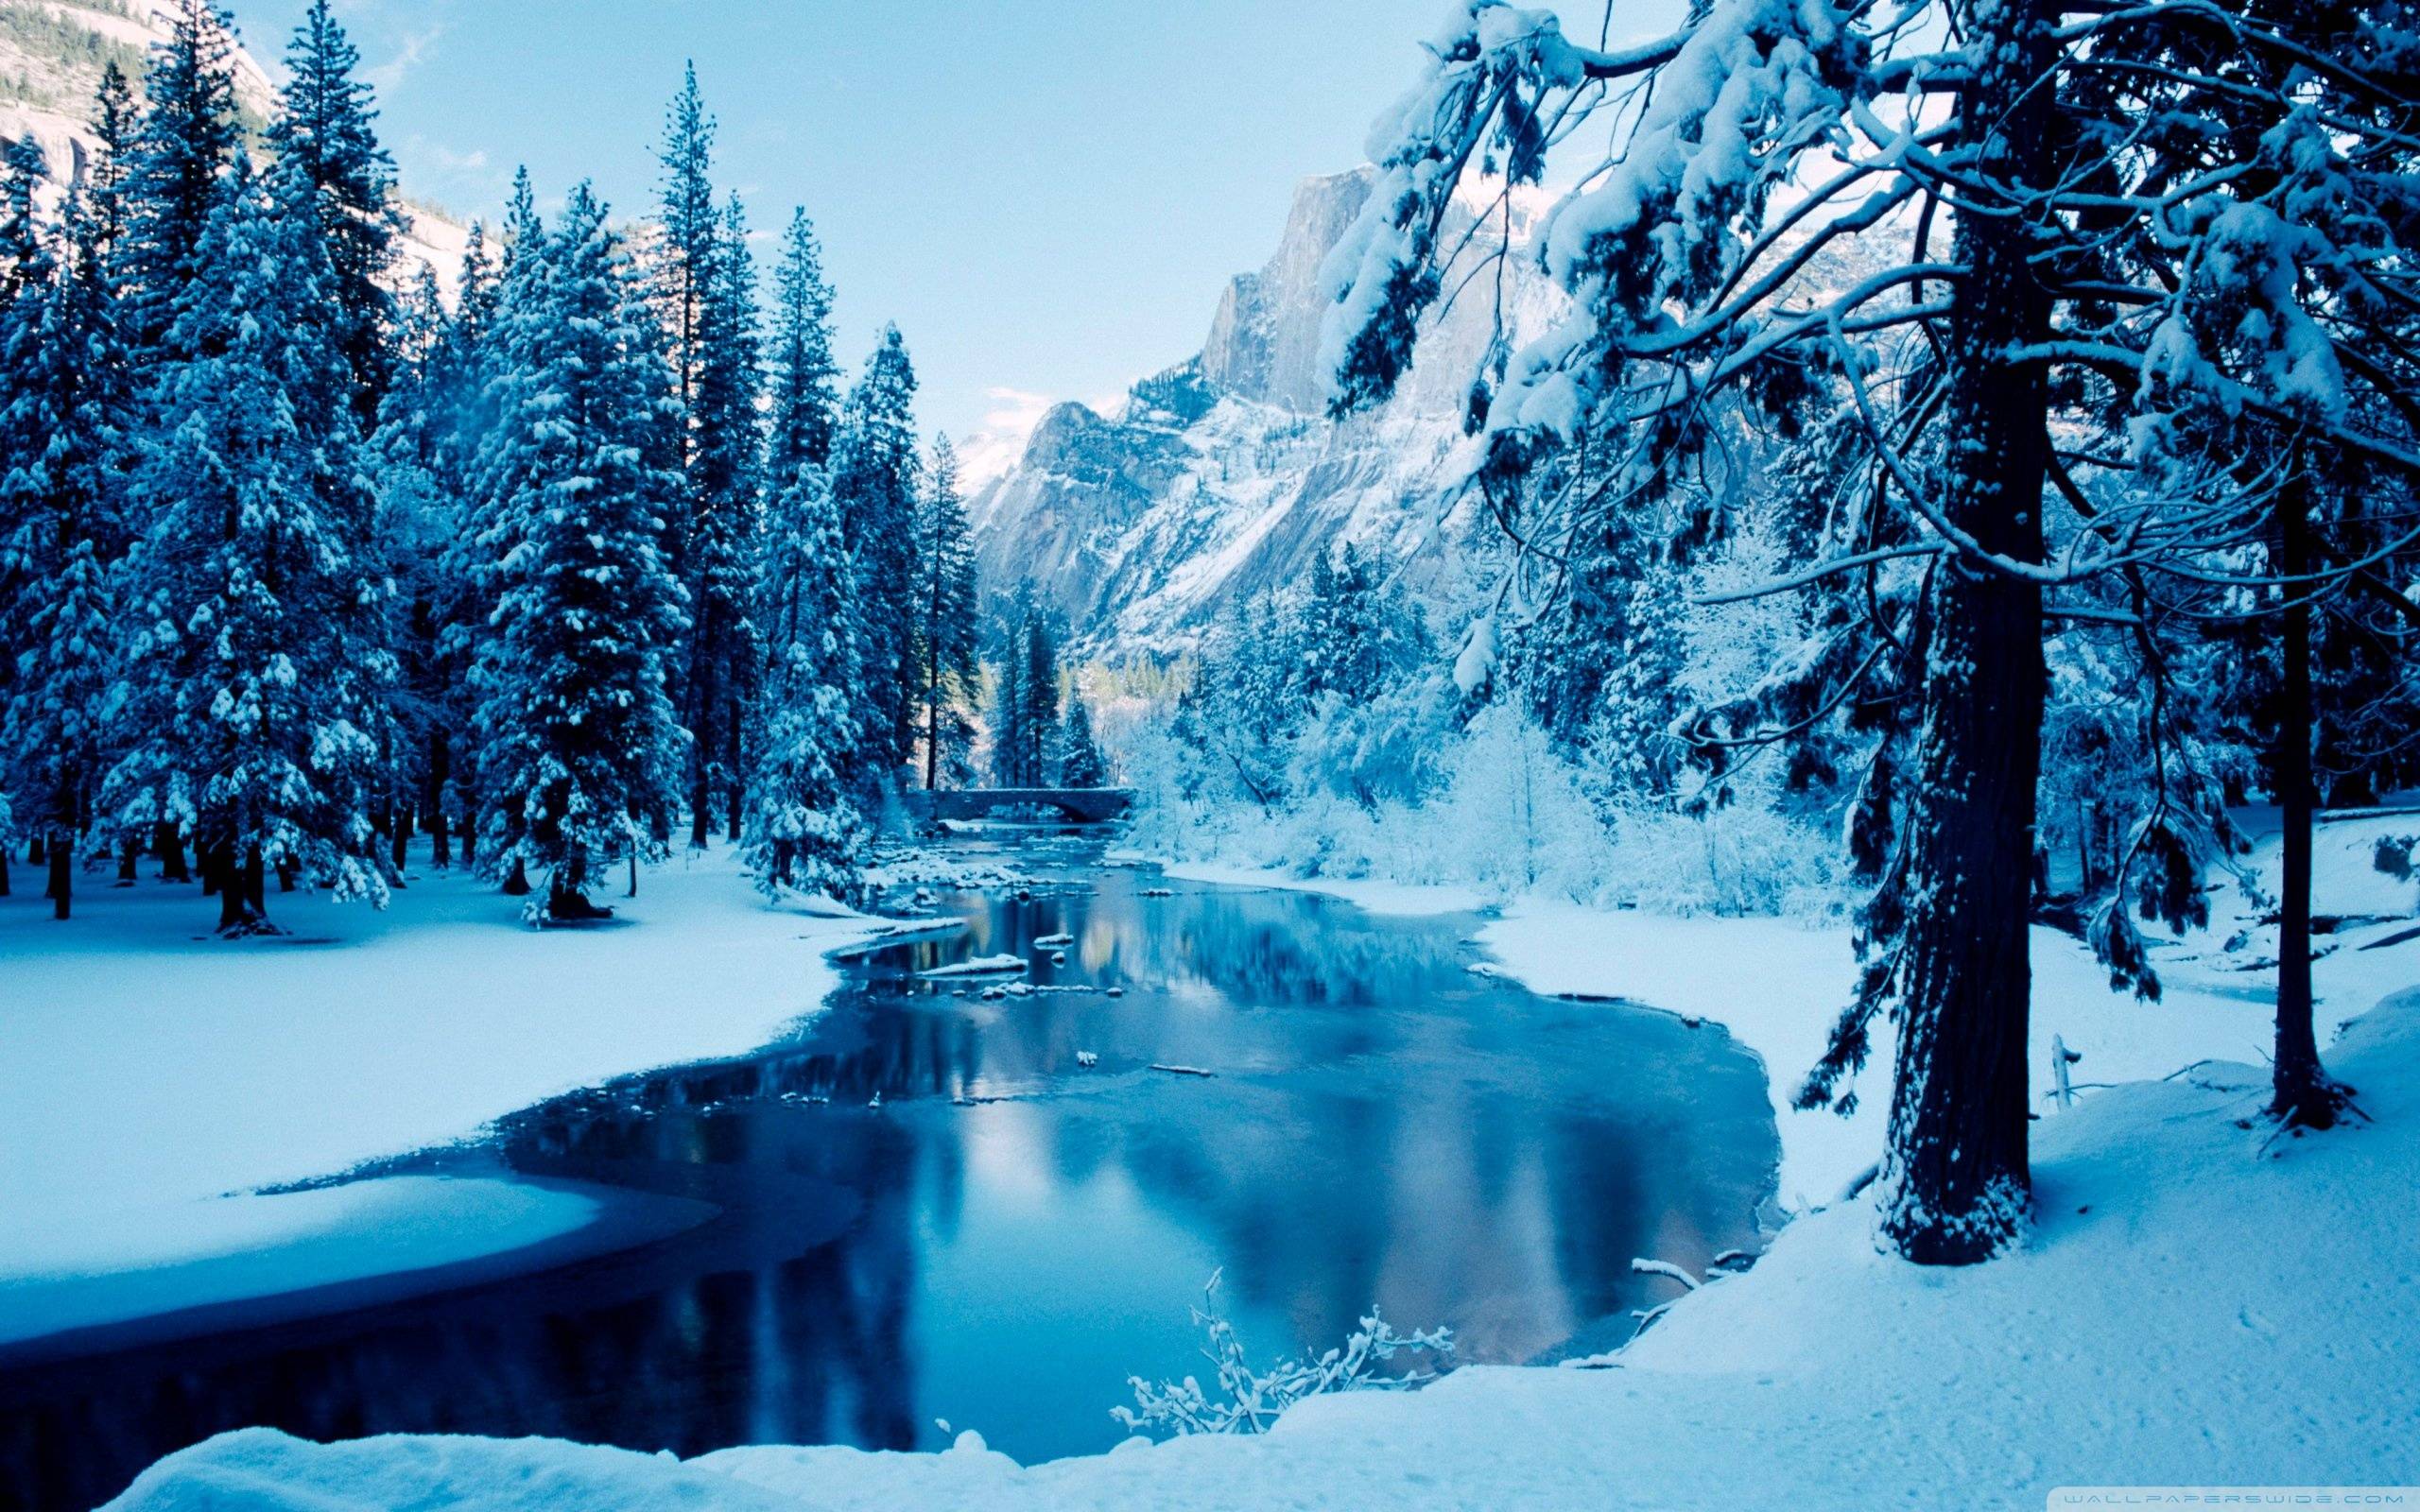 Winter Landscape Wallpaper Full HD | Wallpapers, Backgrounds ...